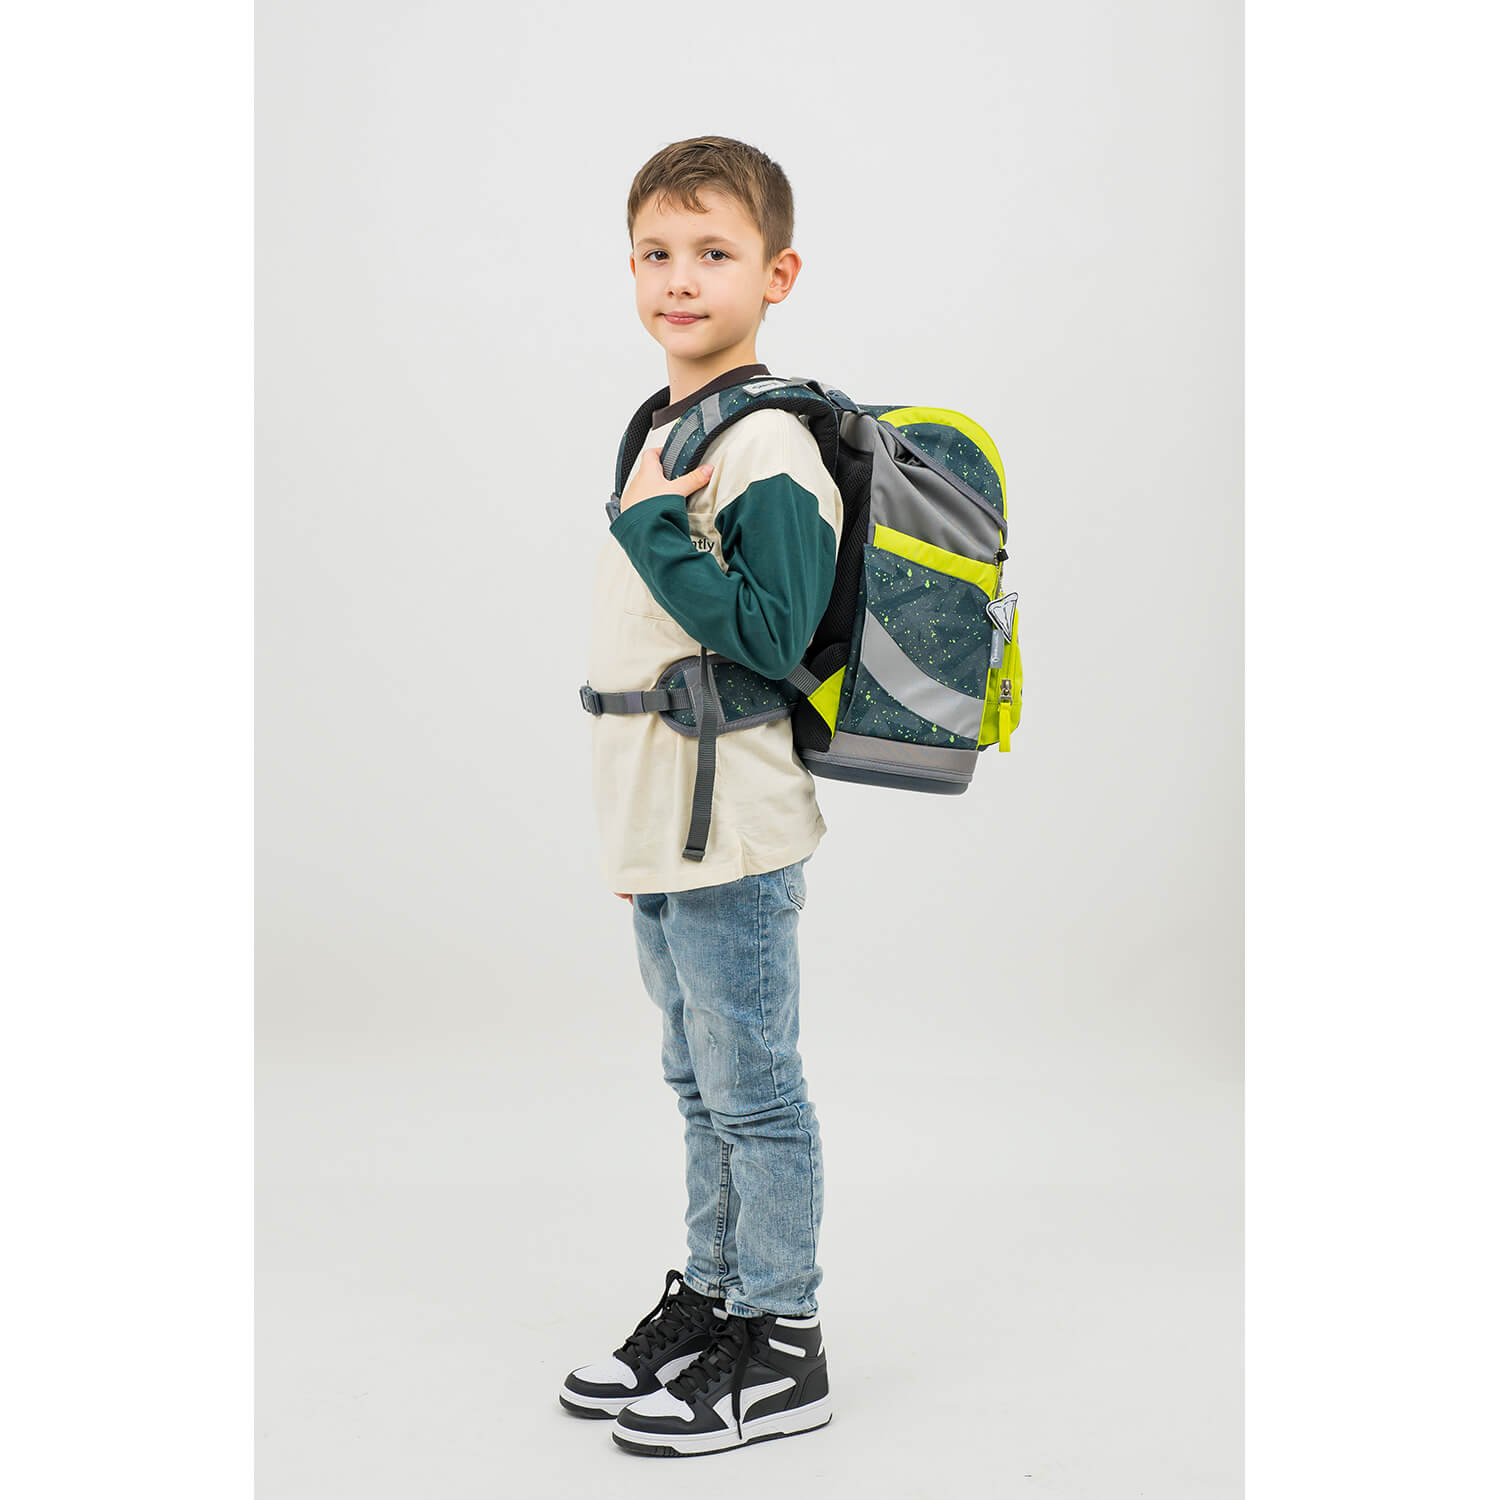 Smarty Green Splash schoolbag set 6 pcs with GRATIS keychain